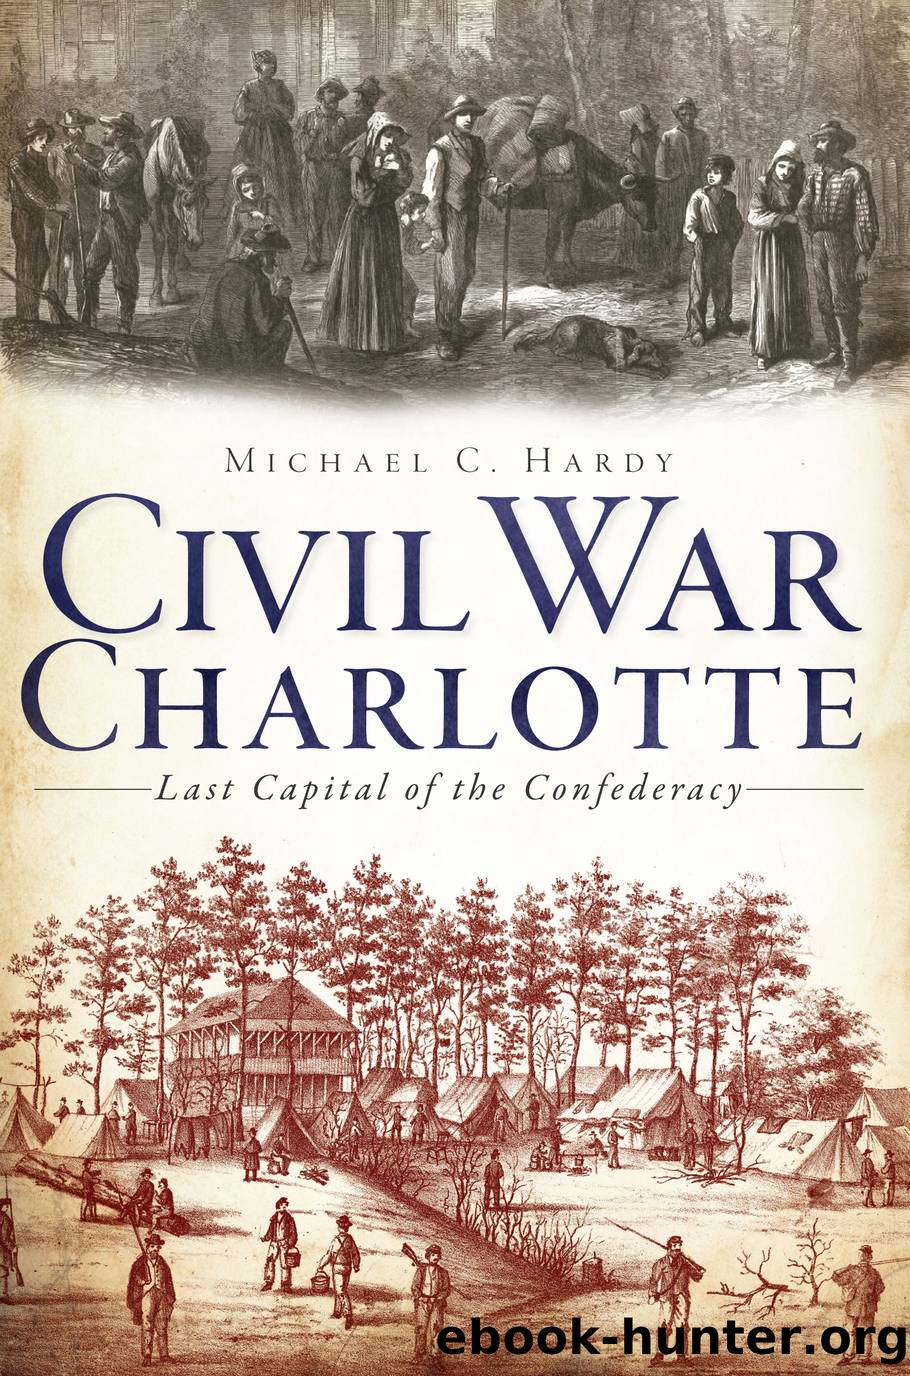 Civil War Charlotte by Michael C. Hardy